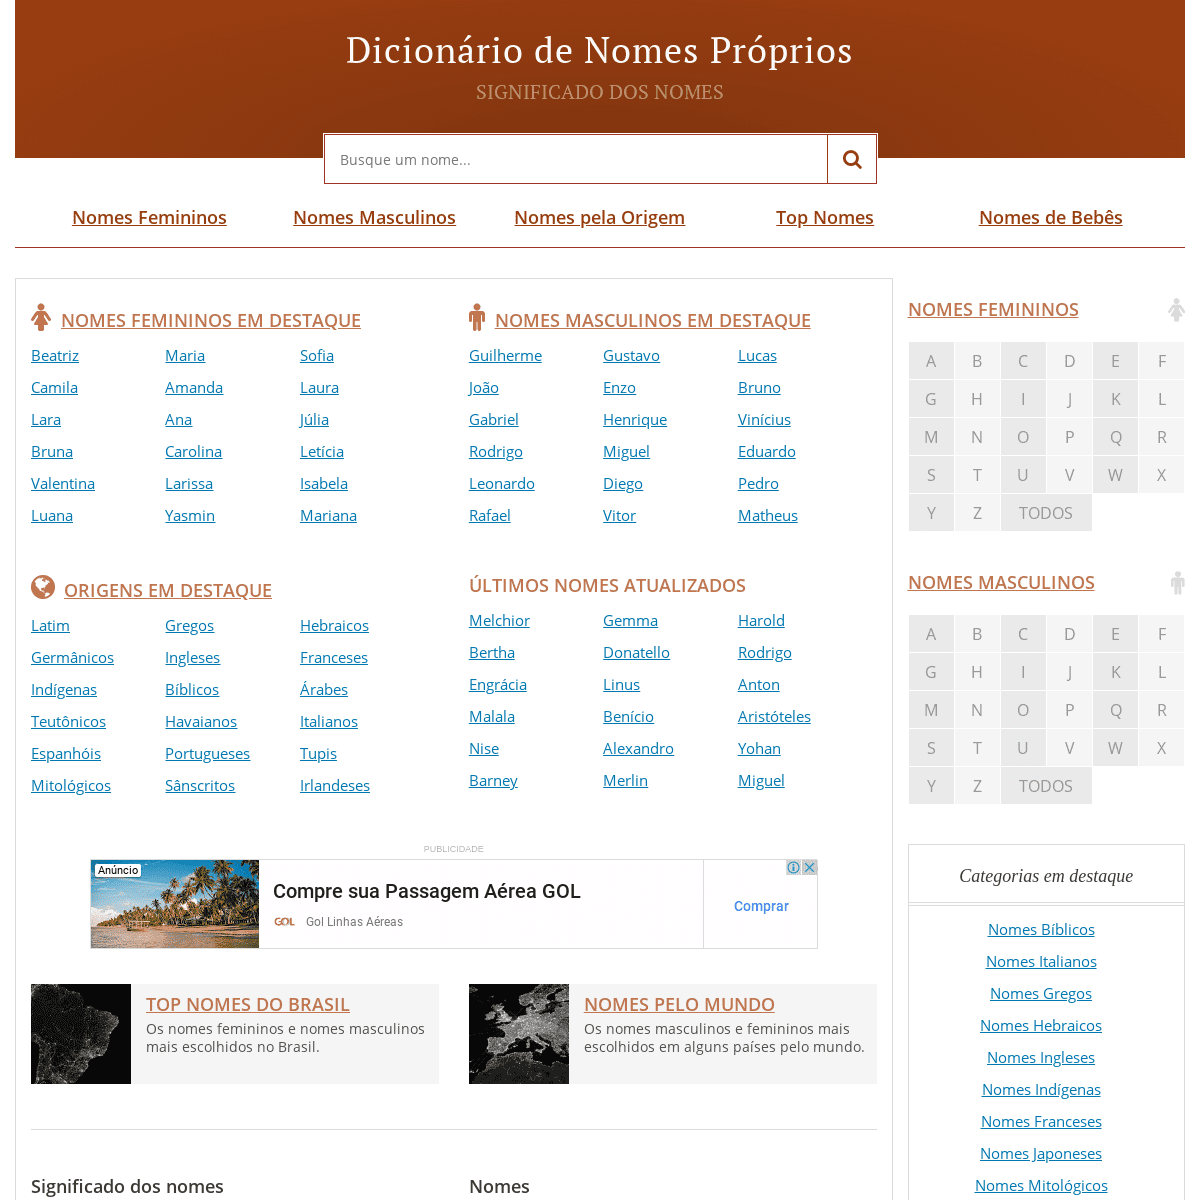 A complete backup of dicionariodenomesproprios.com.br